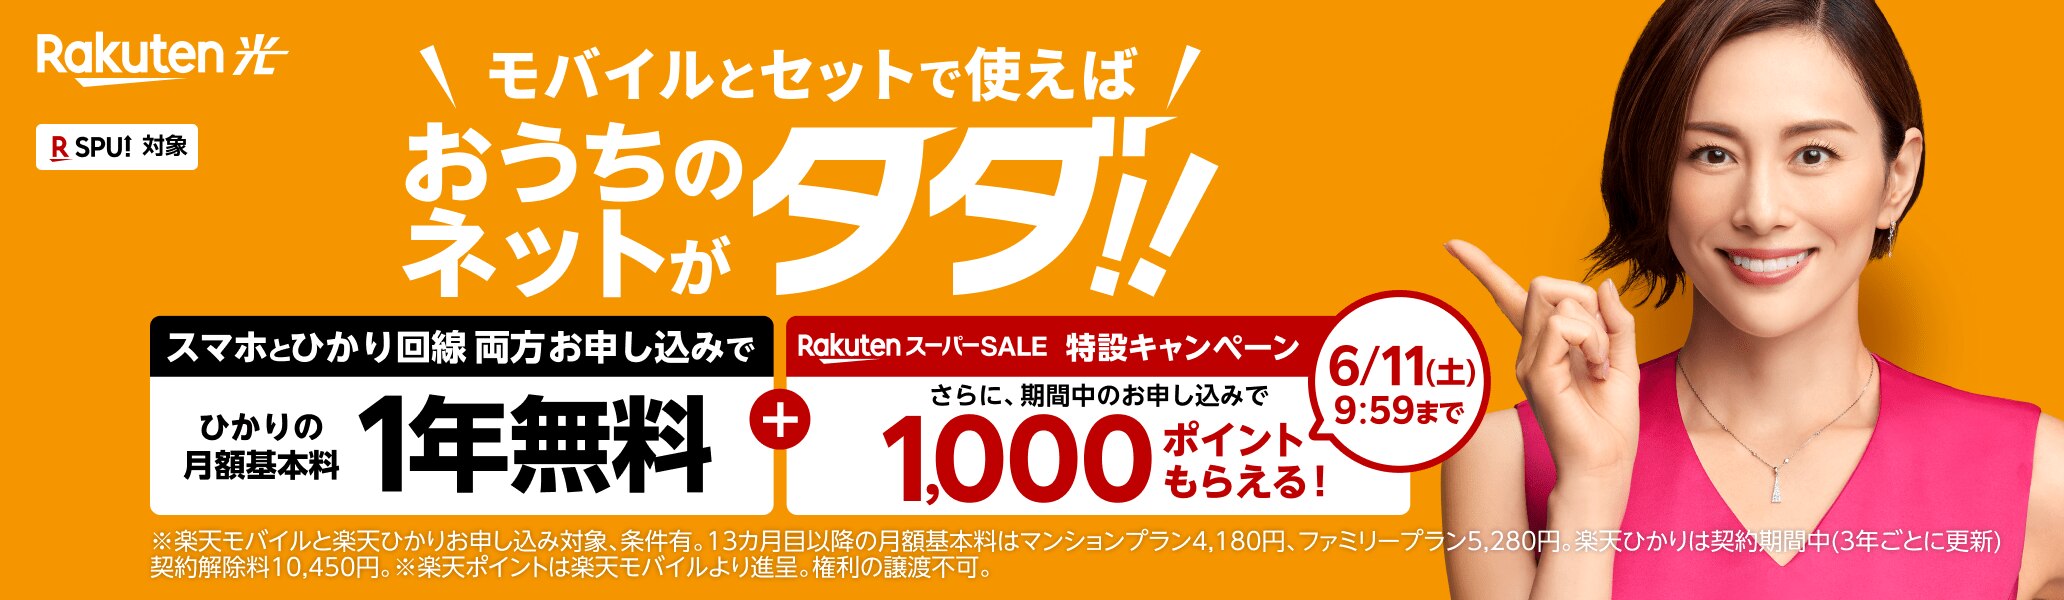 https://network.mobile.rakuten.co.jp/assets/img/bnr/rakuten-hikari-yone-1032-300.png?210304